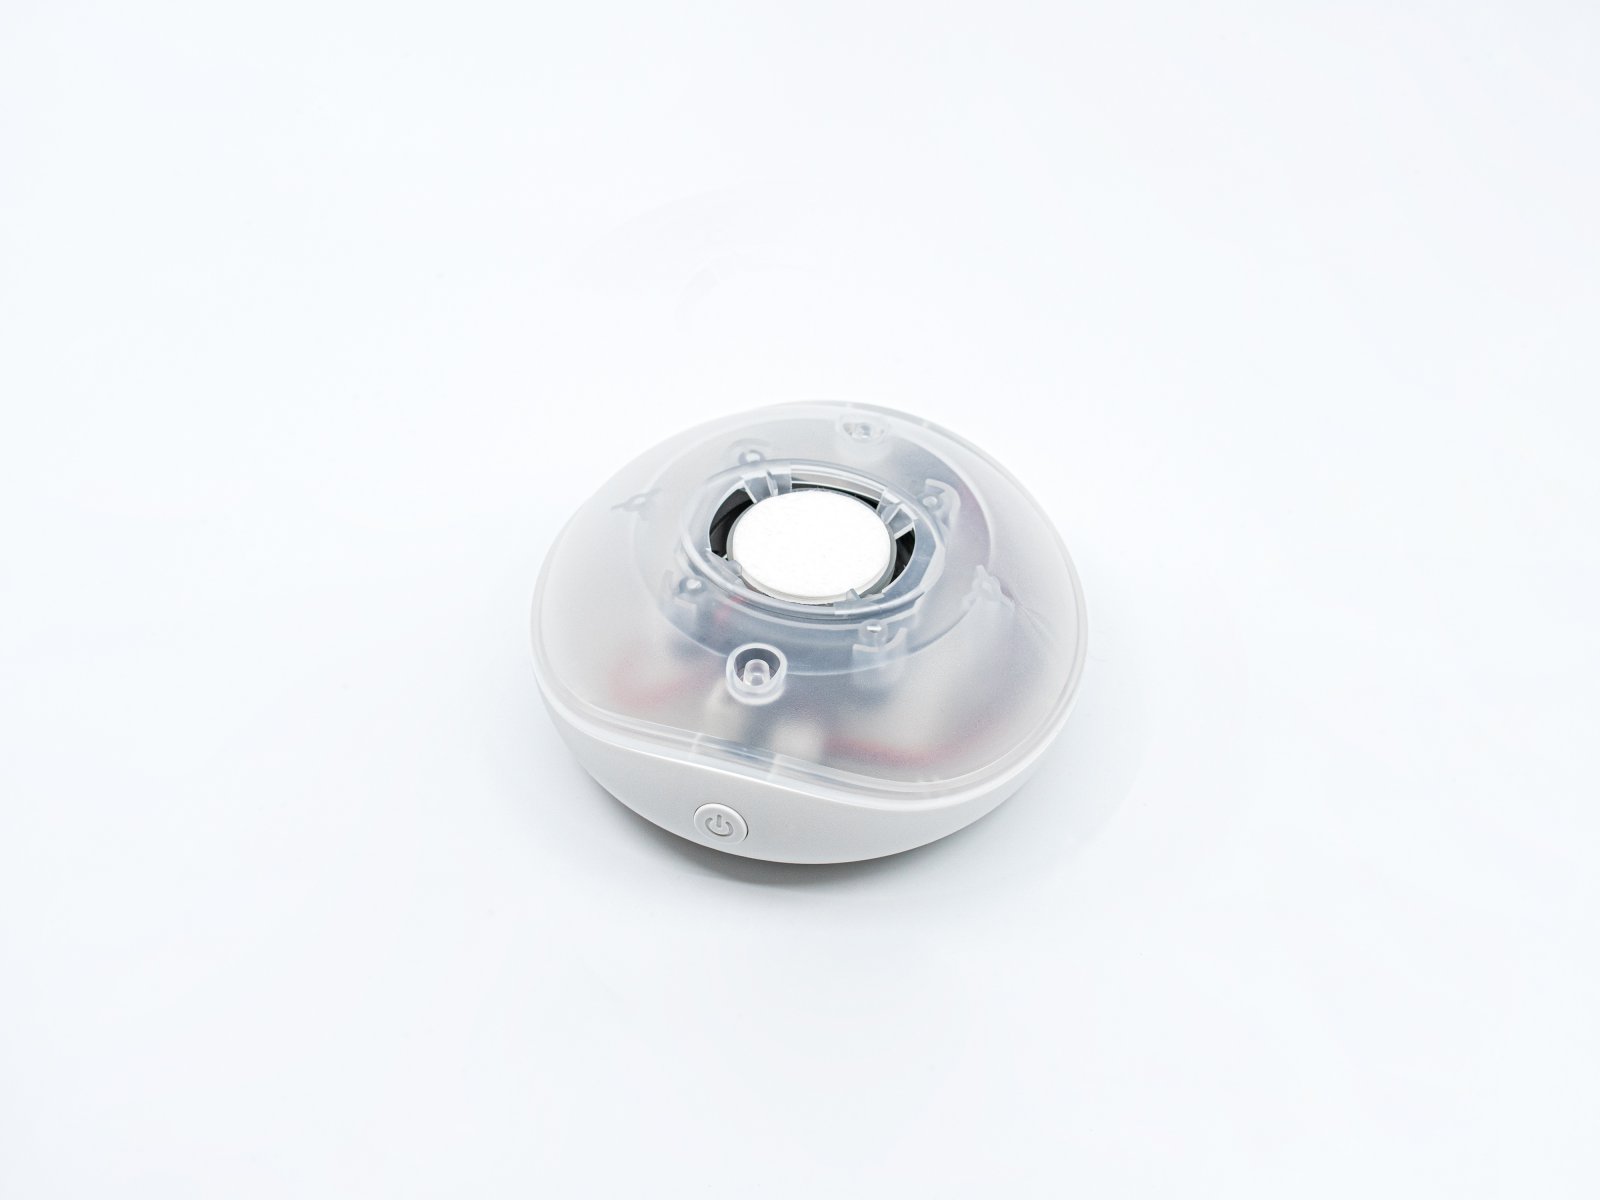 Aroma diffuser EASY, white - Diffuser with fan - 2